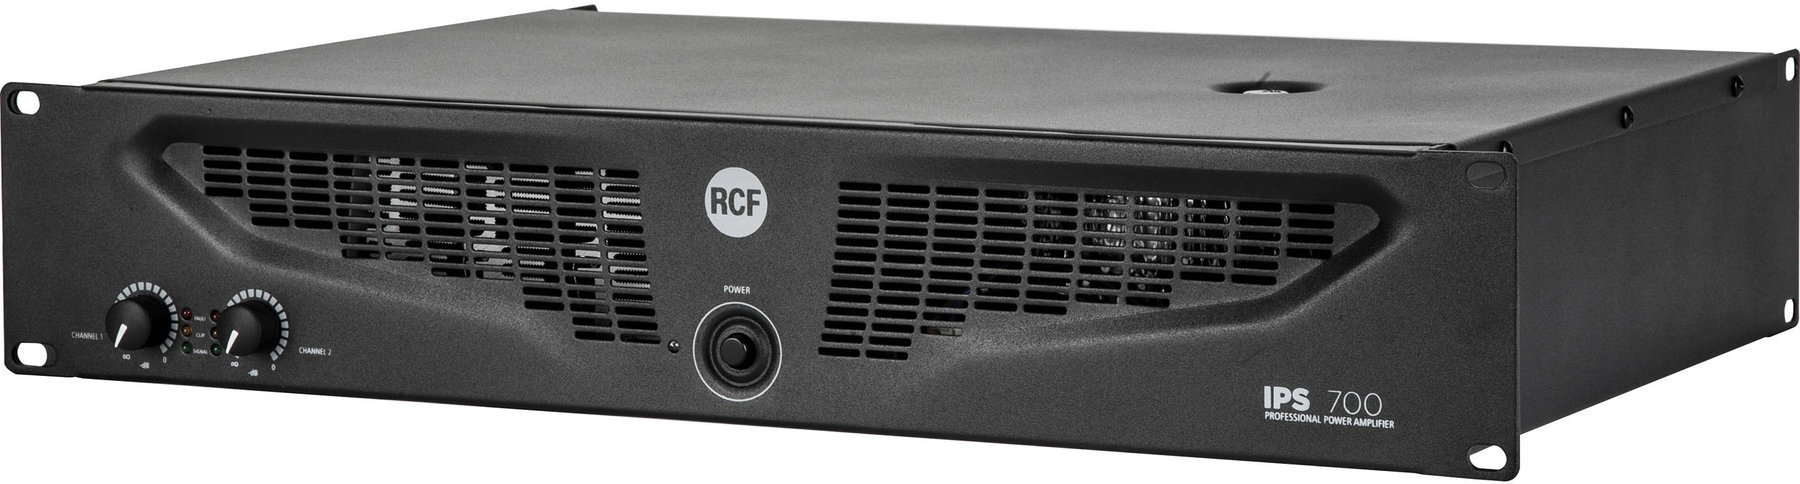 Power amplifier RCF IPS 700 Power amplifier